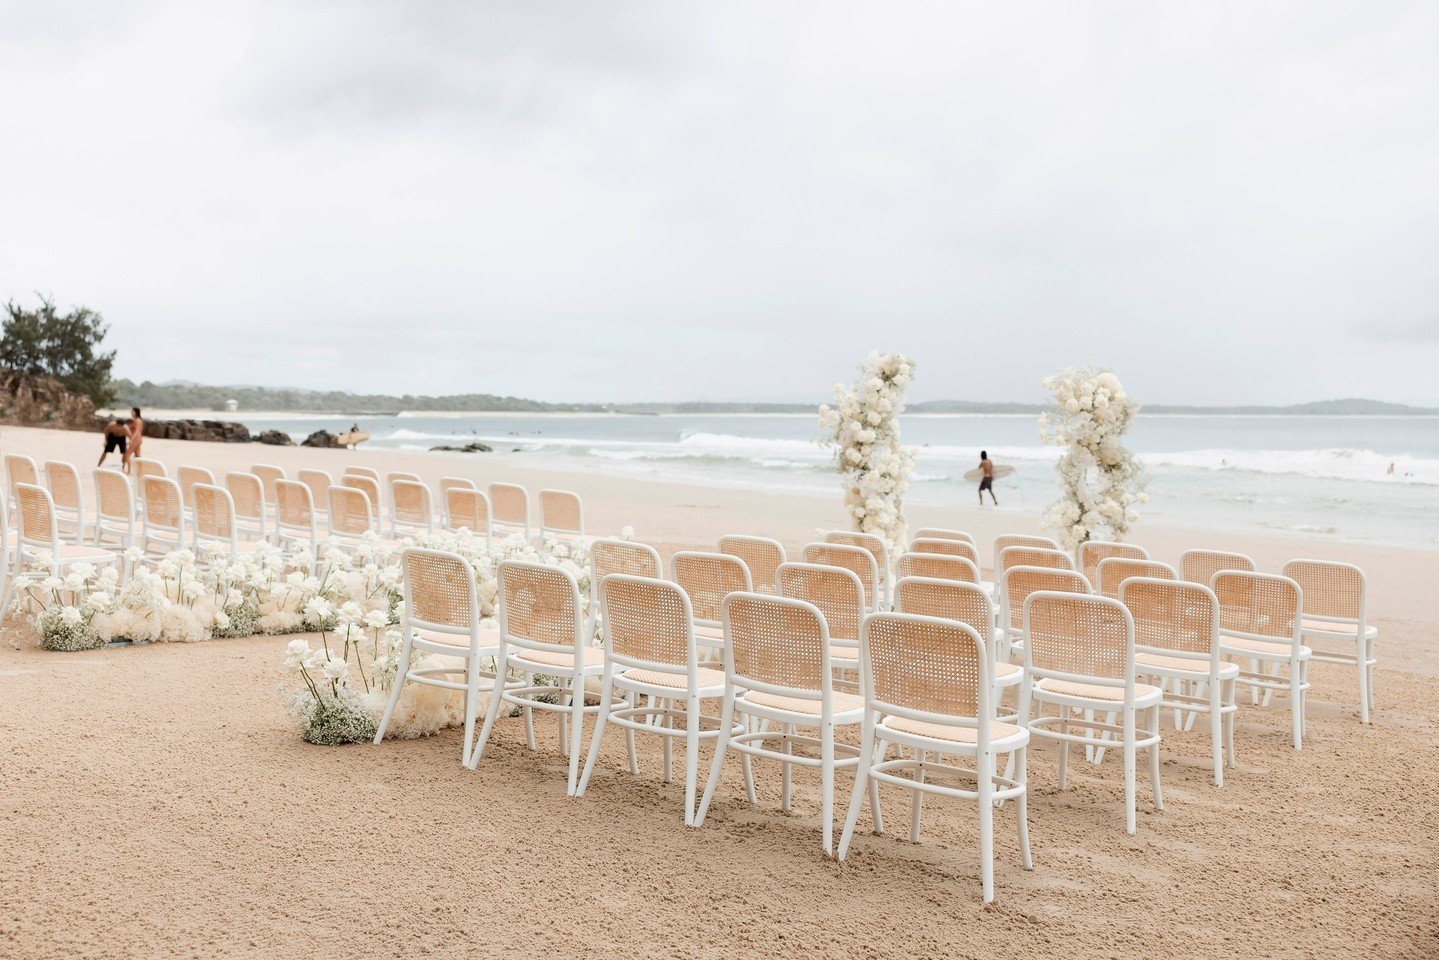 Perfection 🤍⁠
⁠
Ceremony Venue: Little Cove, Noosa Heads⁠
Photographer: @bayleighvedelago ⁠
Florist: @mondofloraldesigns⁠
Planner &amp; Stylist: @lovebirdweddings ⁠
⁠
⁠
⁠
⁠
⁠
⁠
⁠
⁠
⁠
⁠
⁠
⁠
⁠
⁠
⁠
⁠
#originalwedding #beautifulwedding #elegantwedding #